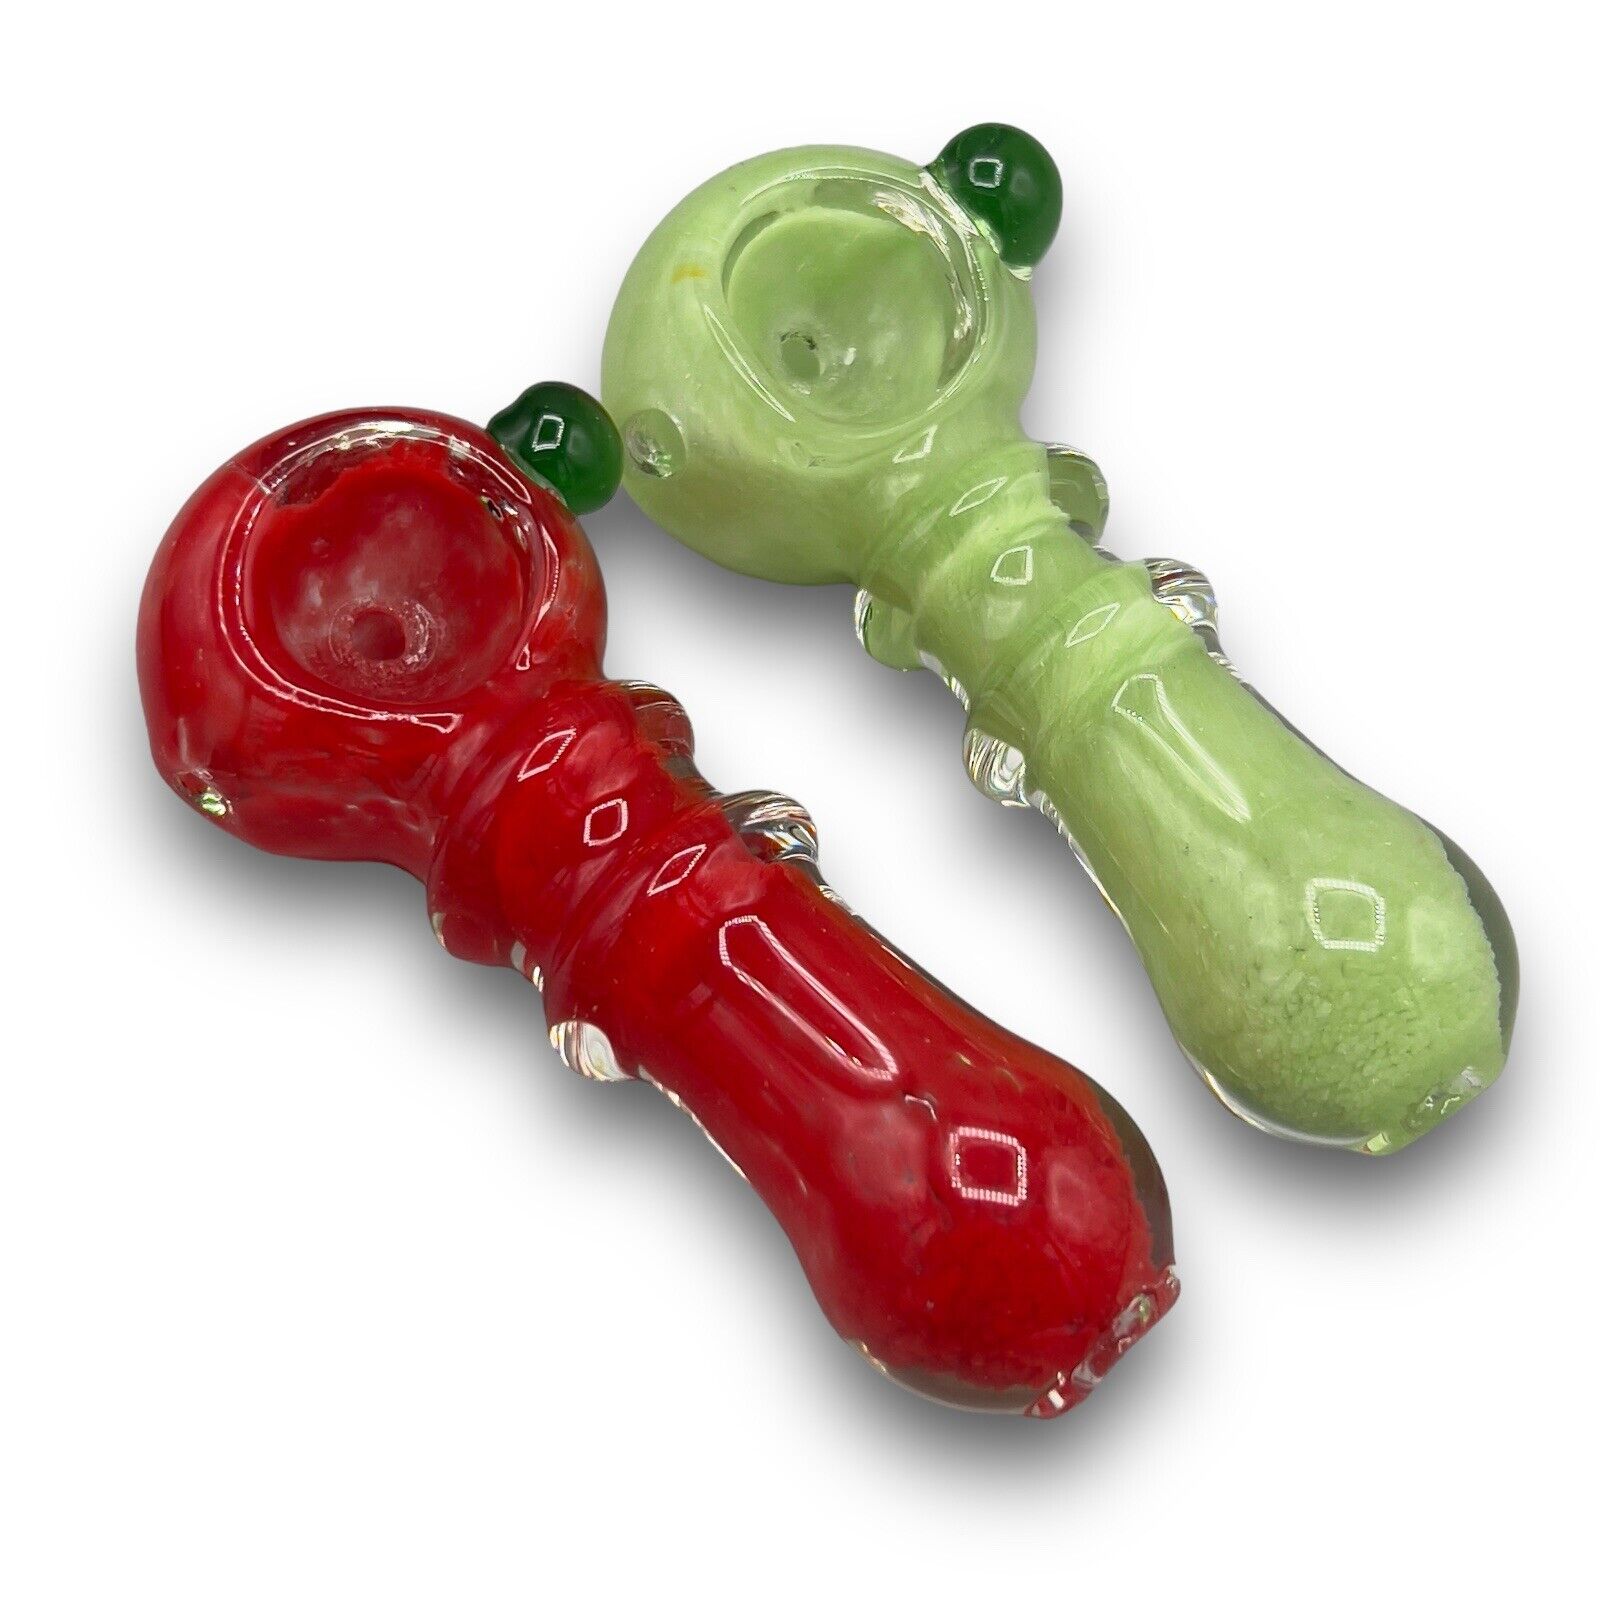 Small Tobacco Glass Bowl Smoking Spoon Pipe Lot - Green & Red - Bundle Set